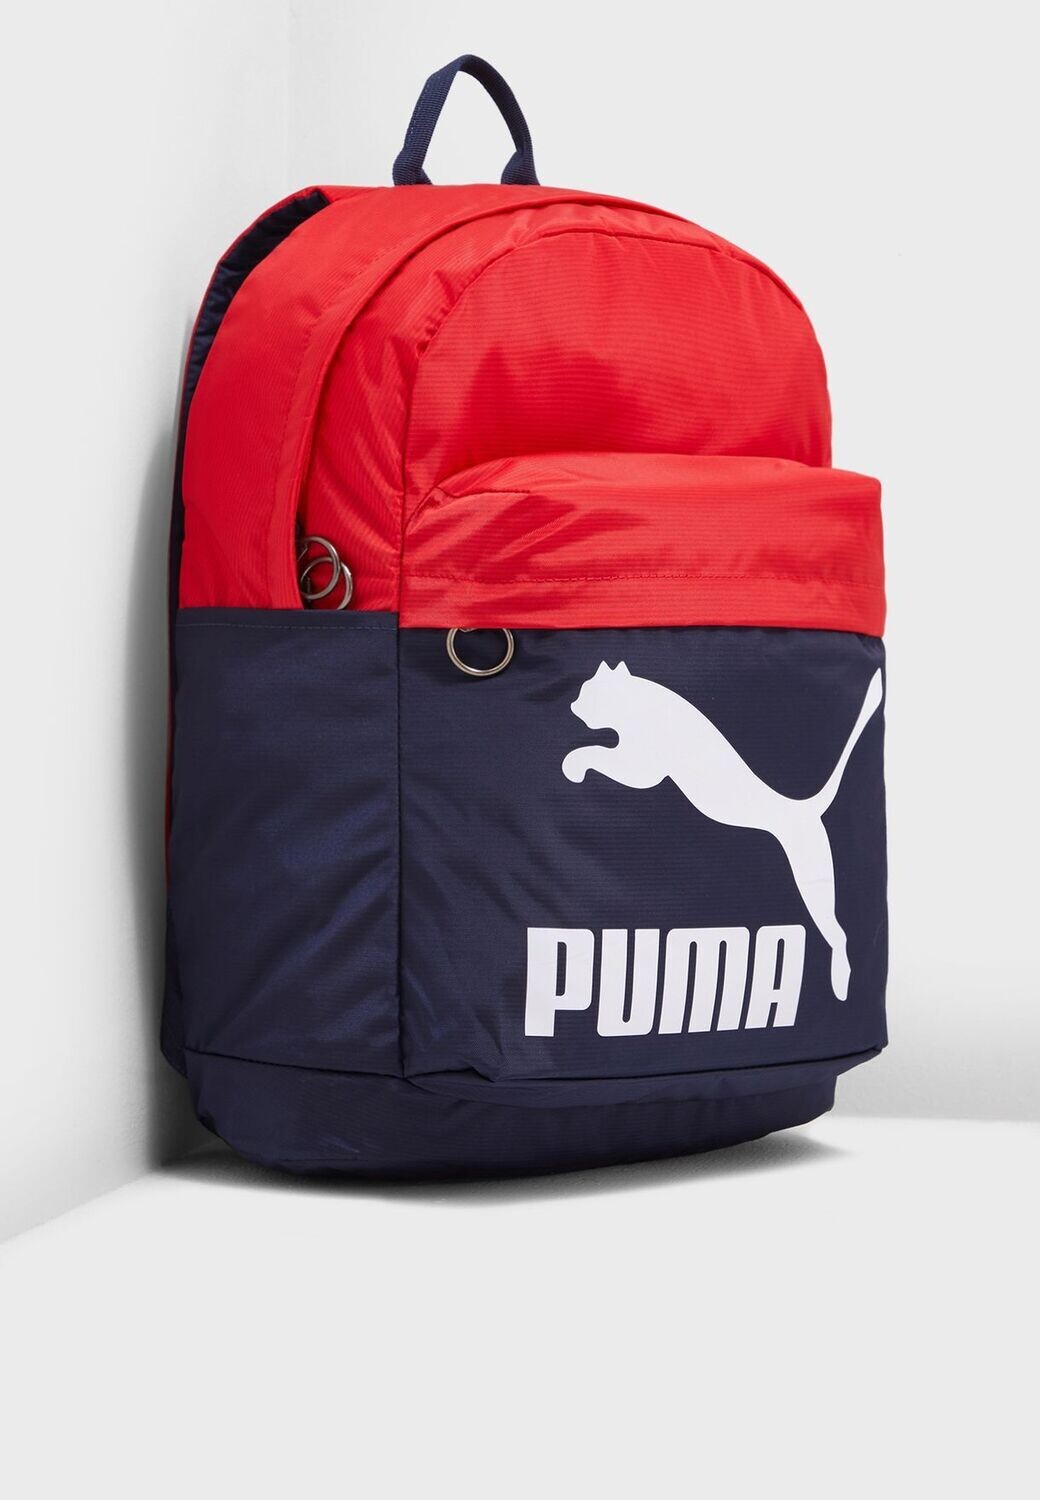 Sac à Dos PUMA Originals Backpack Peacoat-High Risk Red